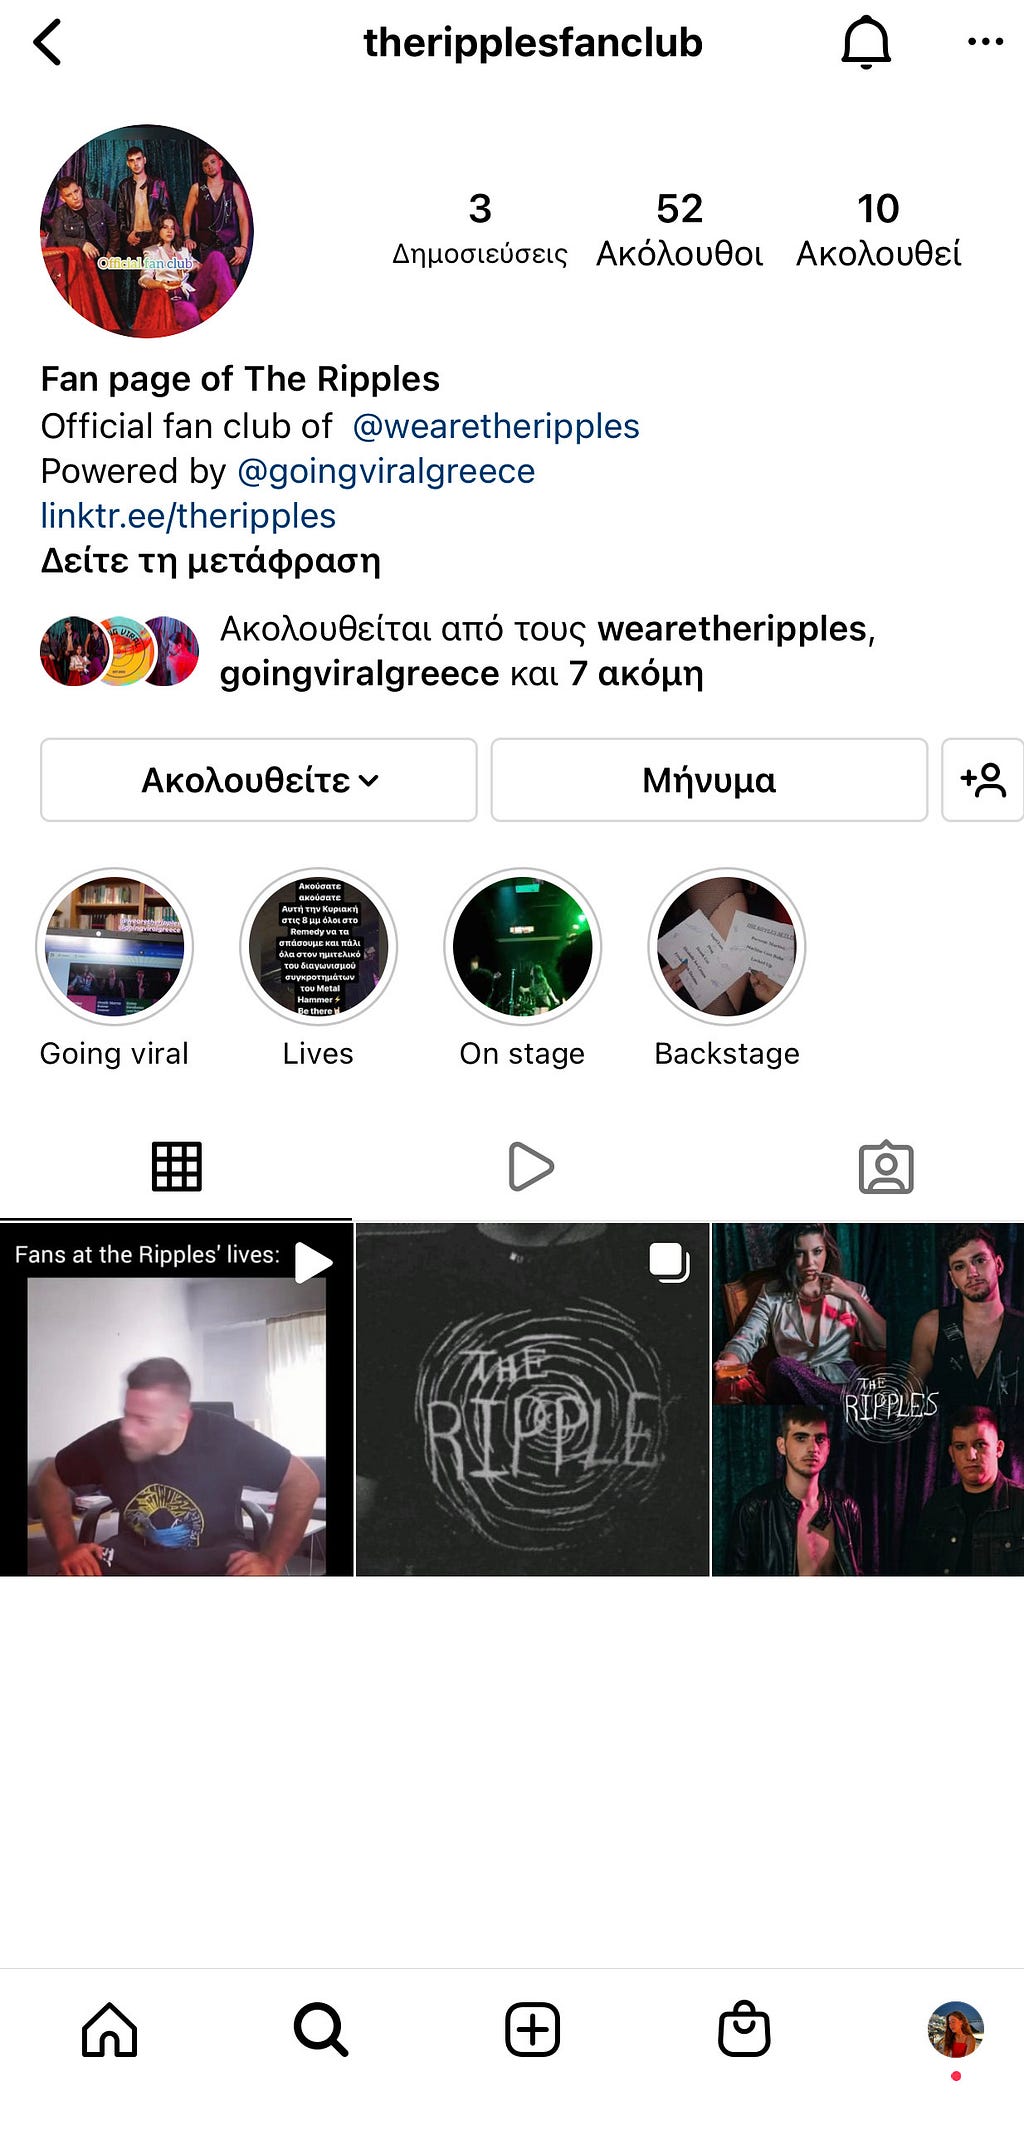 the fan club page on Instagram